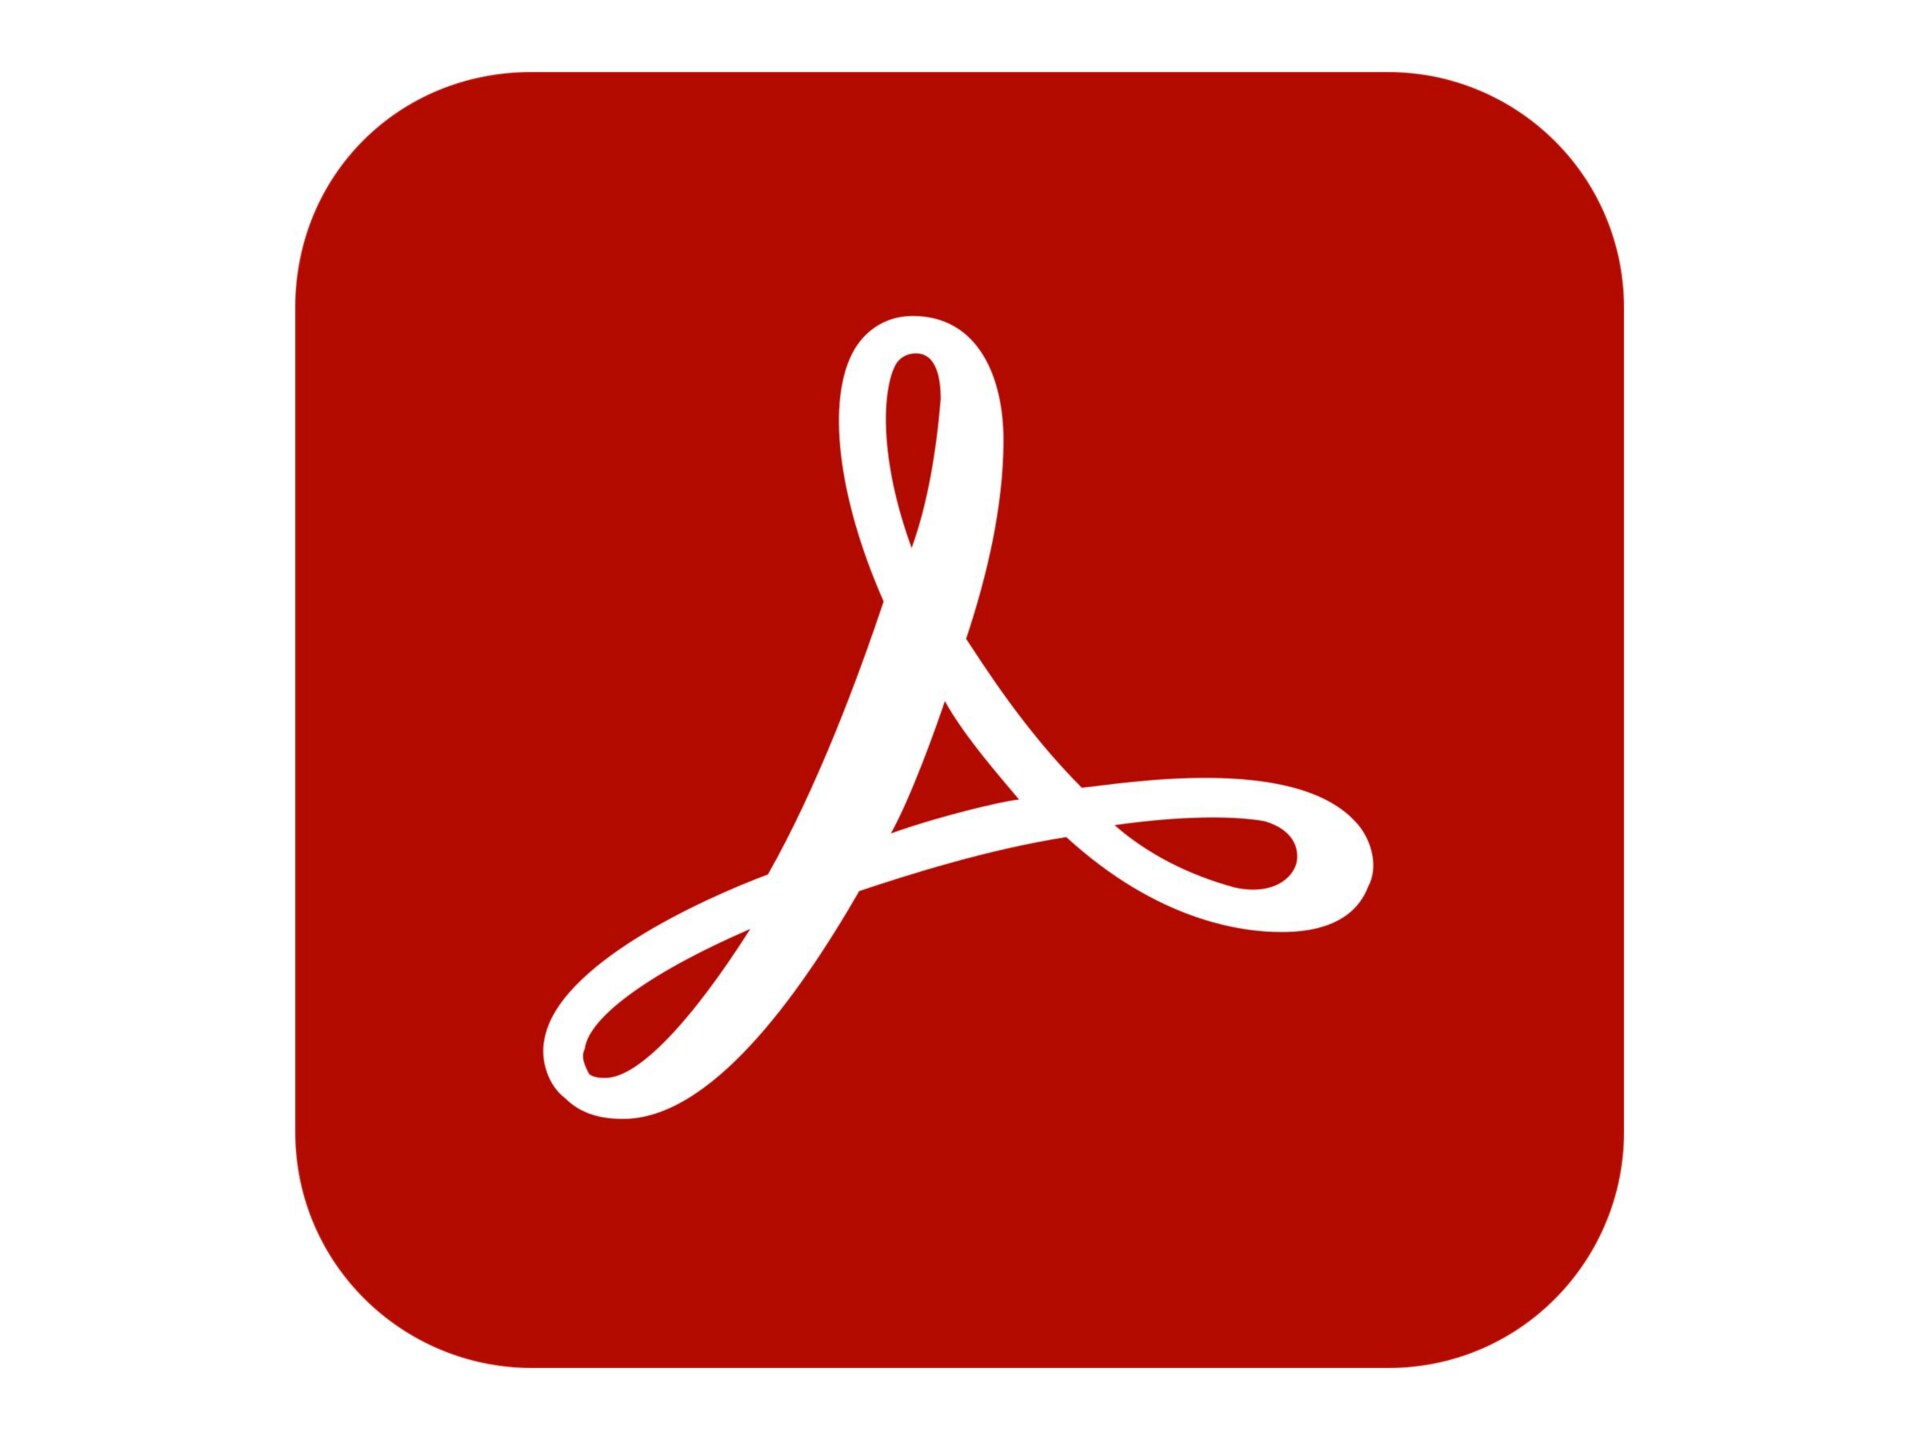 Adobe Acrobat Pro DC for Enterprise - Subscription New (18 months) - 1 user